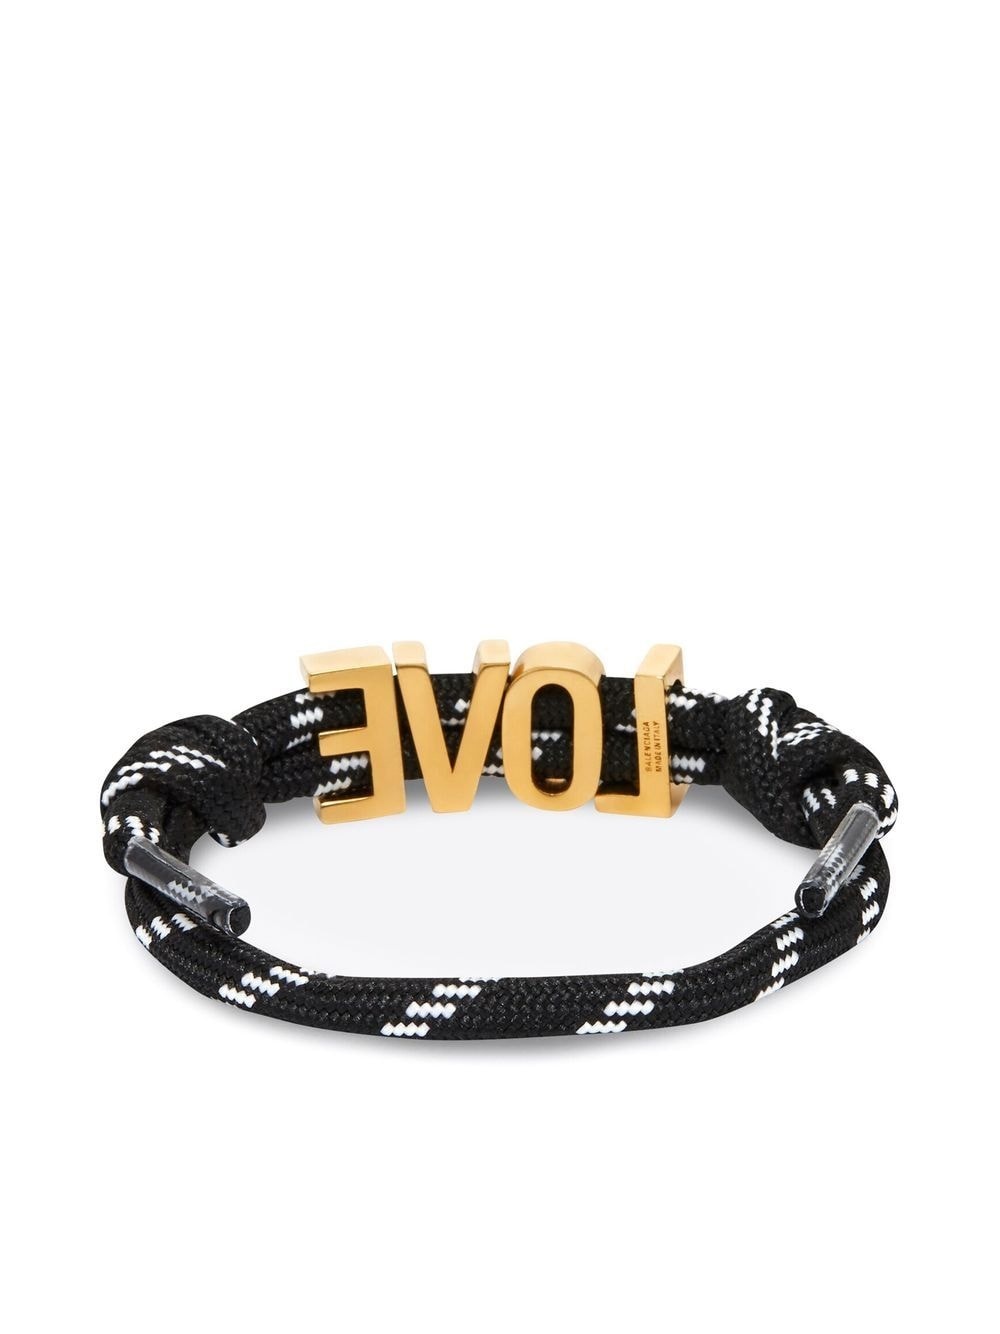 L.O.V.E. cord bracelet - 2